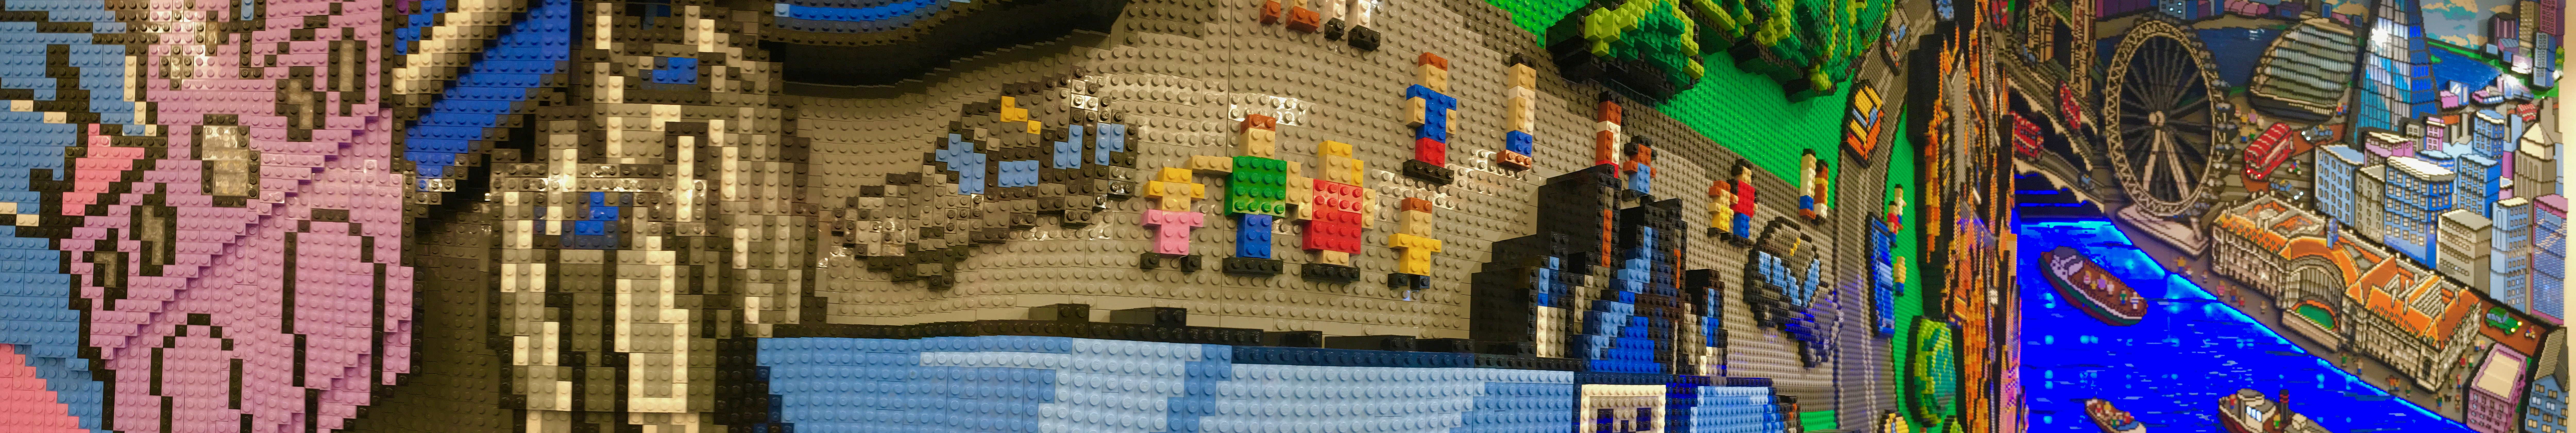 Lego mural pano 1